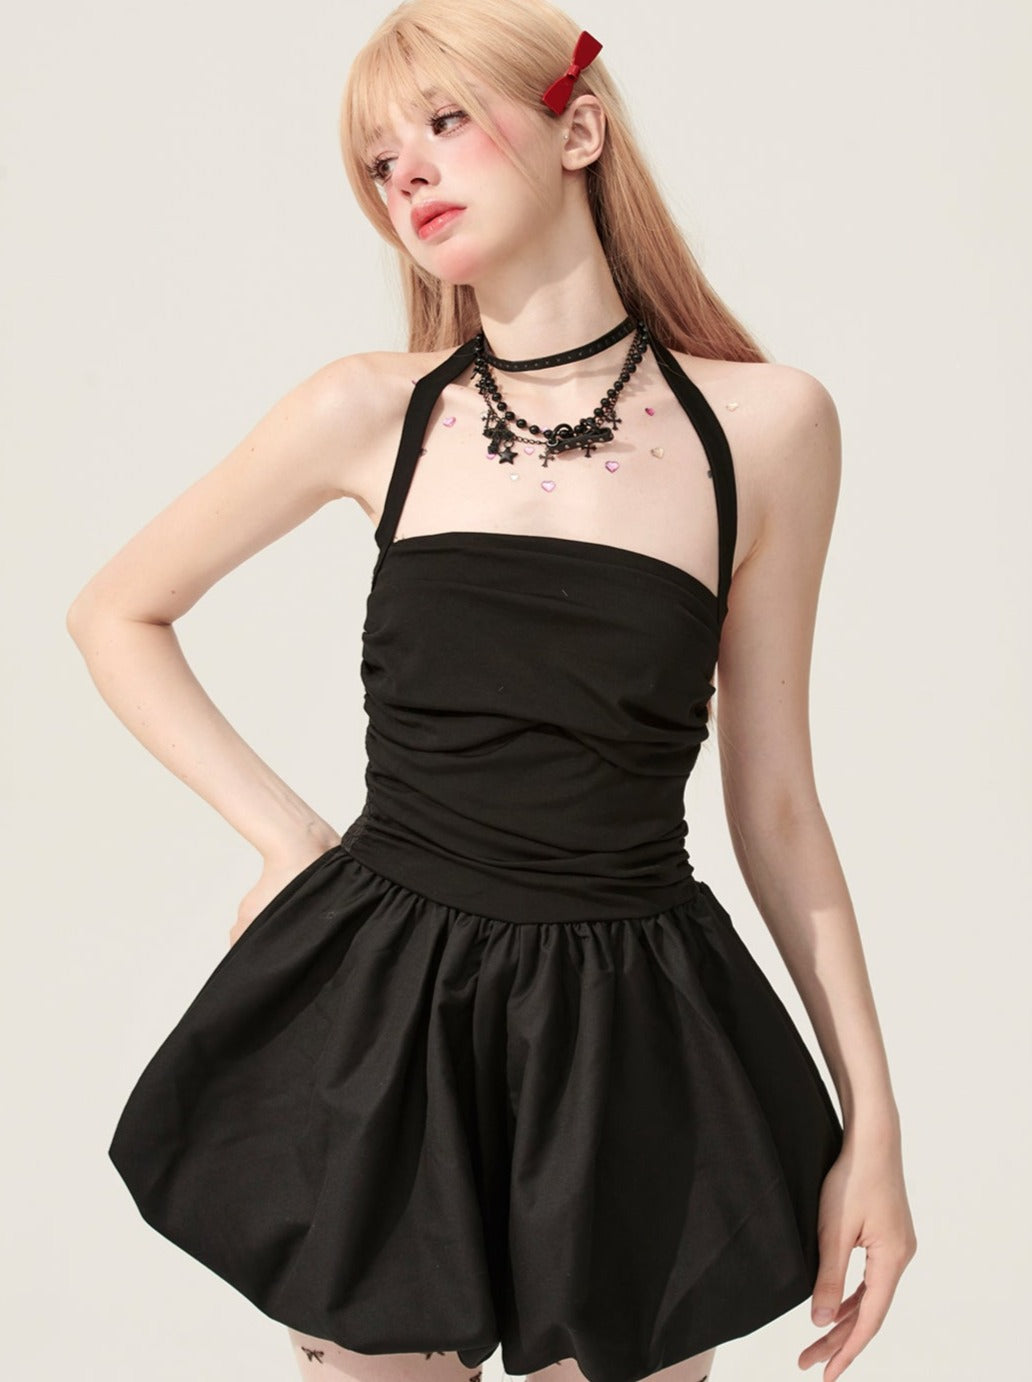 [En vente à 20 heures le 31 mai] Shaoyean a présenté Actress black halterneck dress women's summer puffy skirt